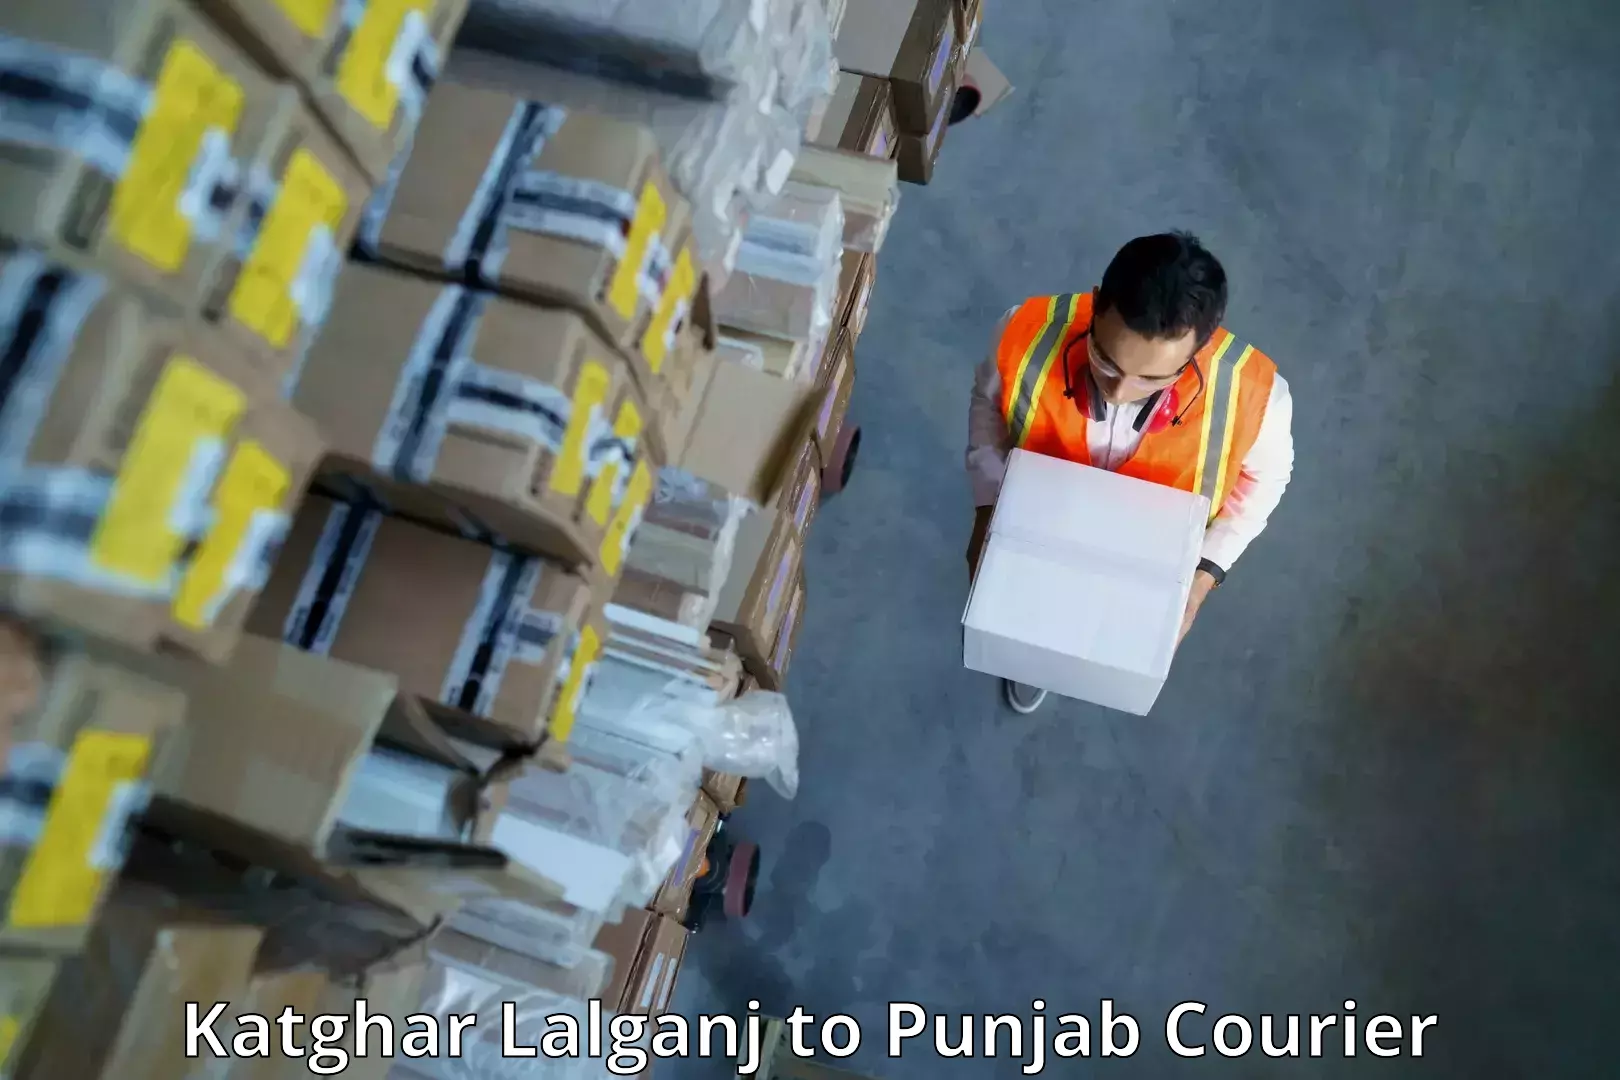 Courier service efficiency Katghar Lalganj to Begowal